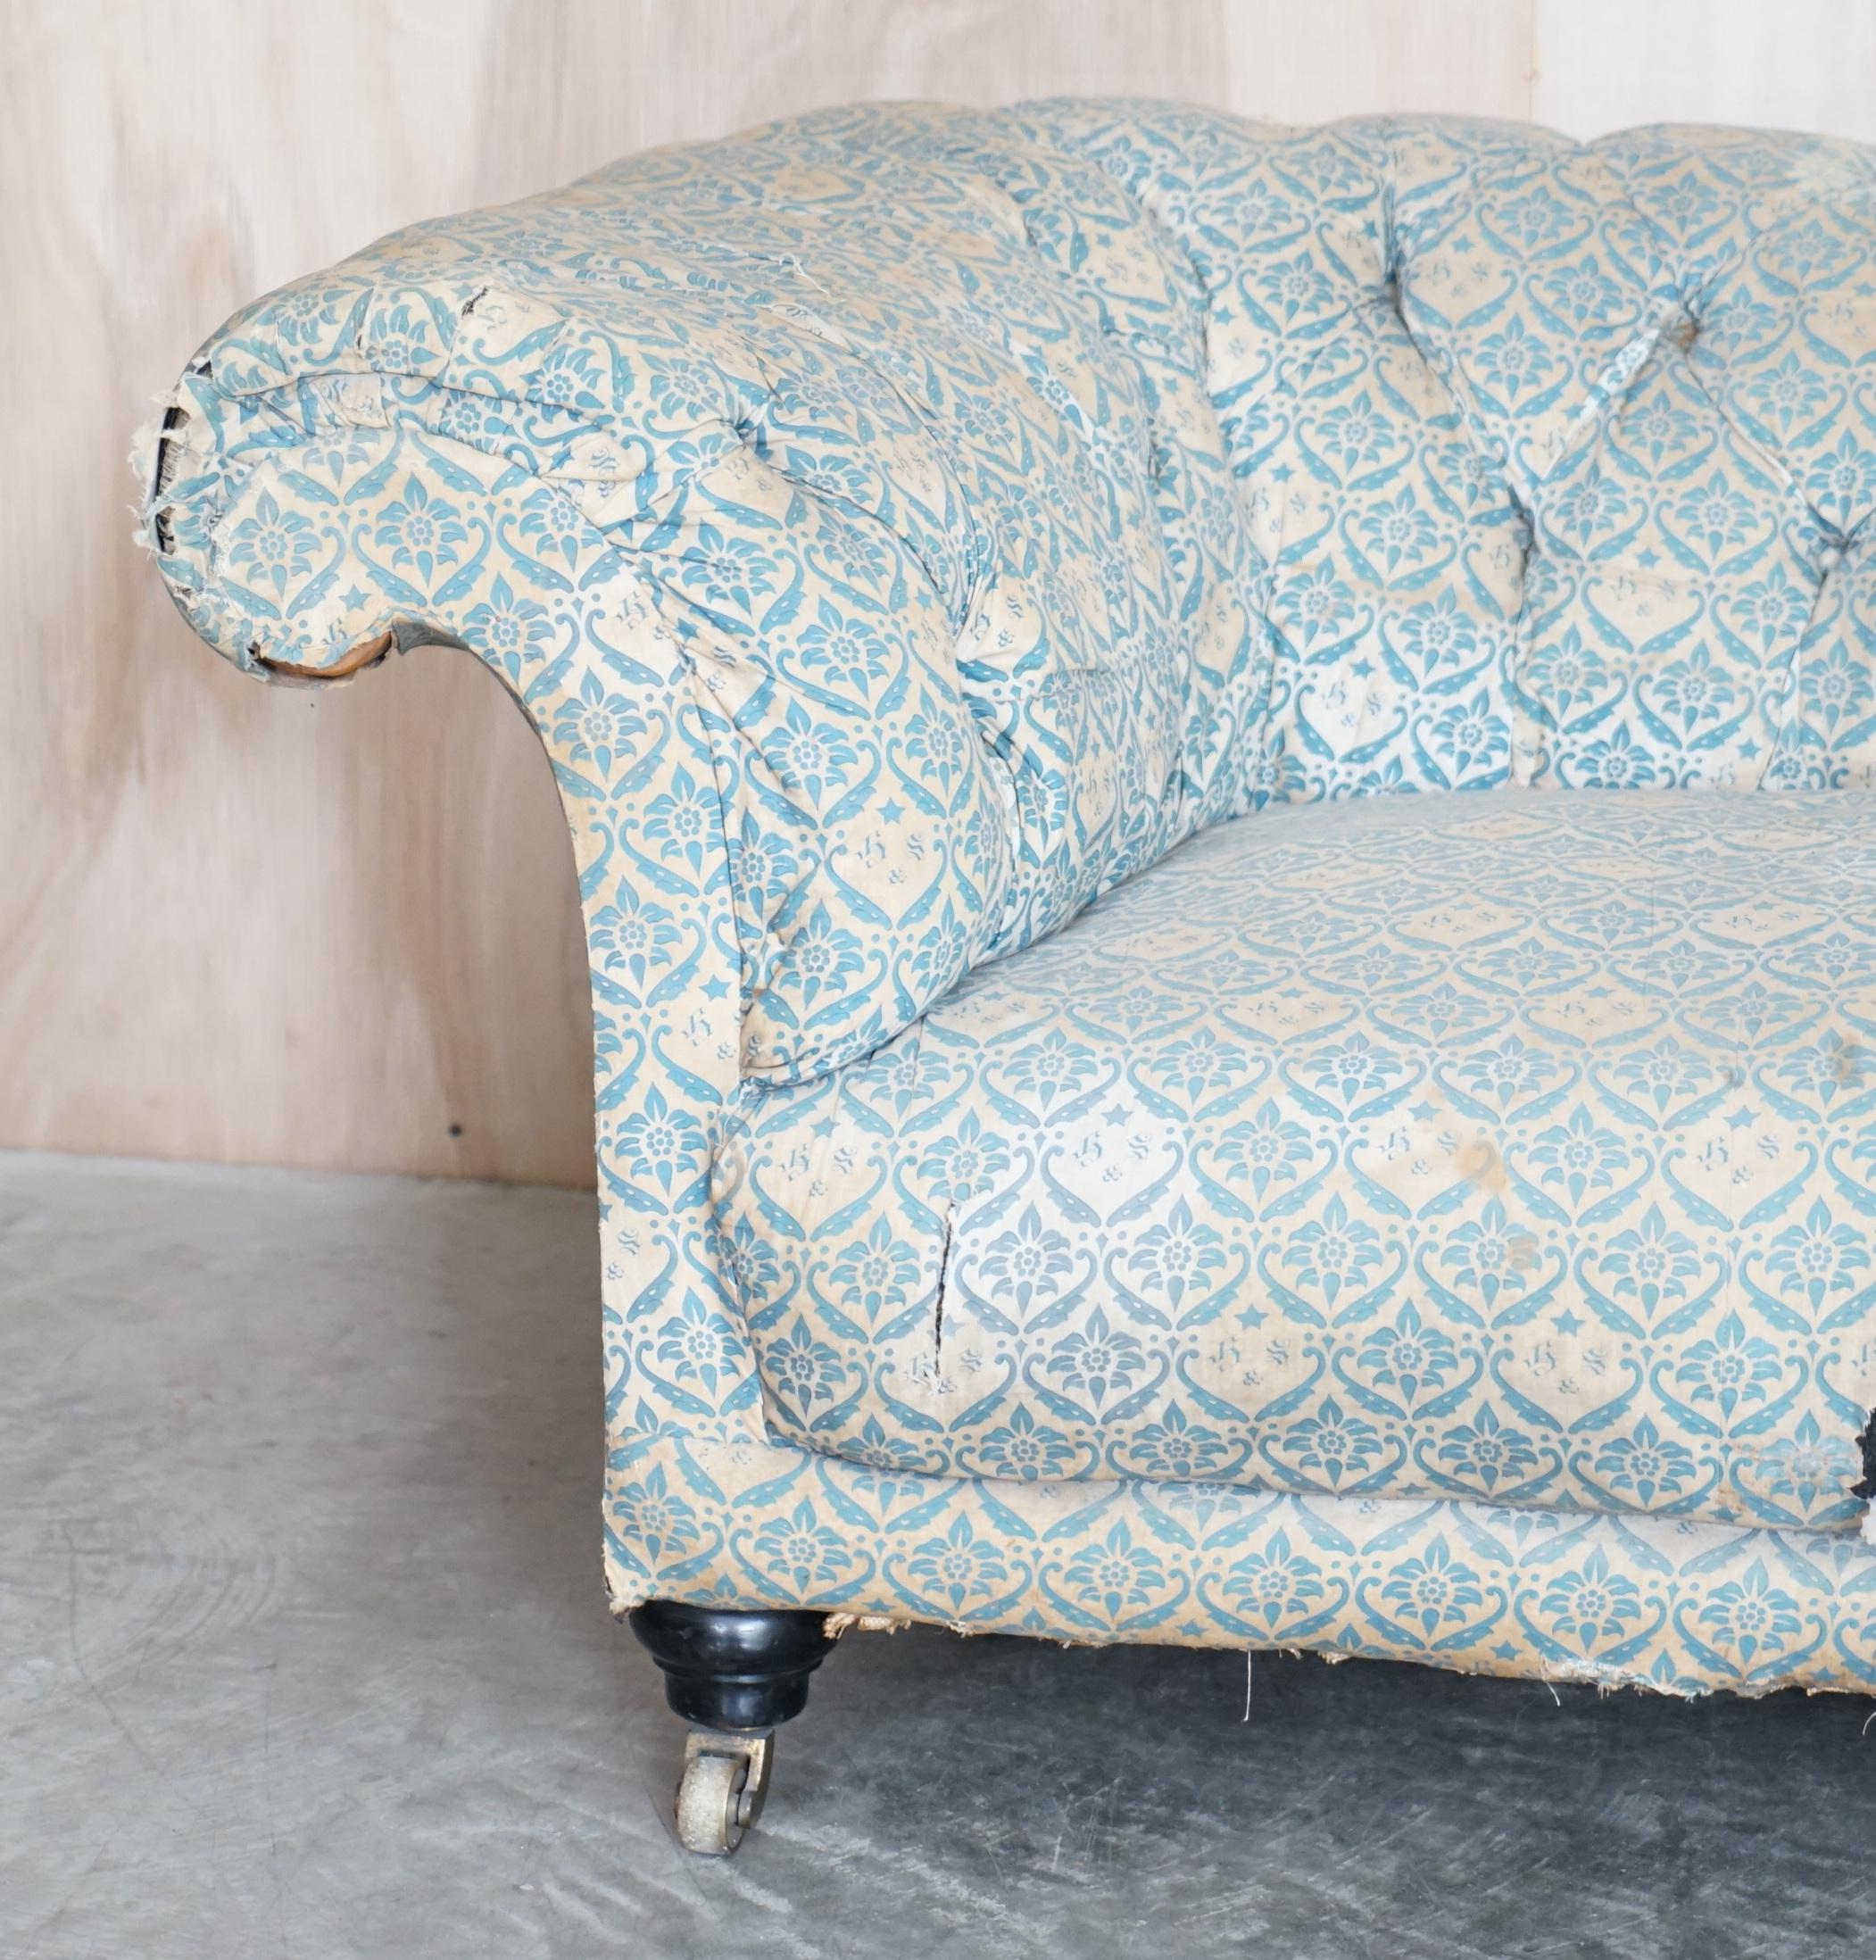 Milieu du XIXe siècle Howard & Son's Chesterfield Sofa Inc Ticking Fabric ancien victorien non restauré en vente